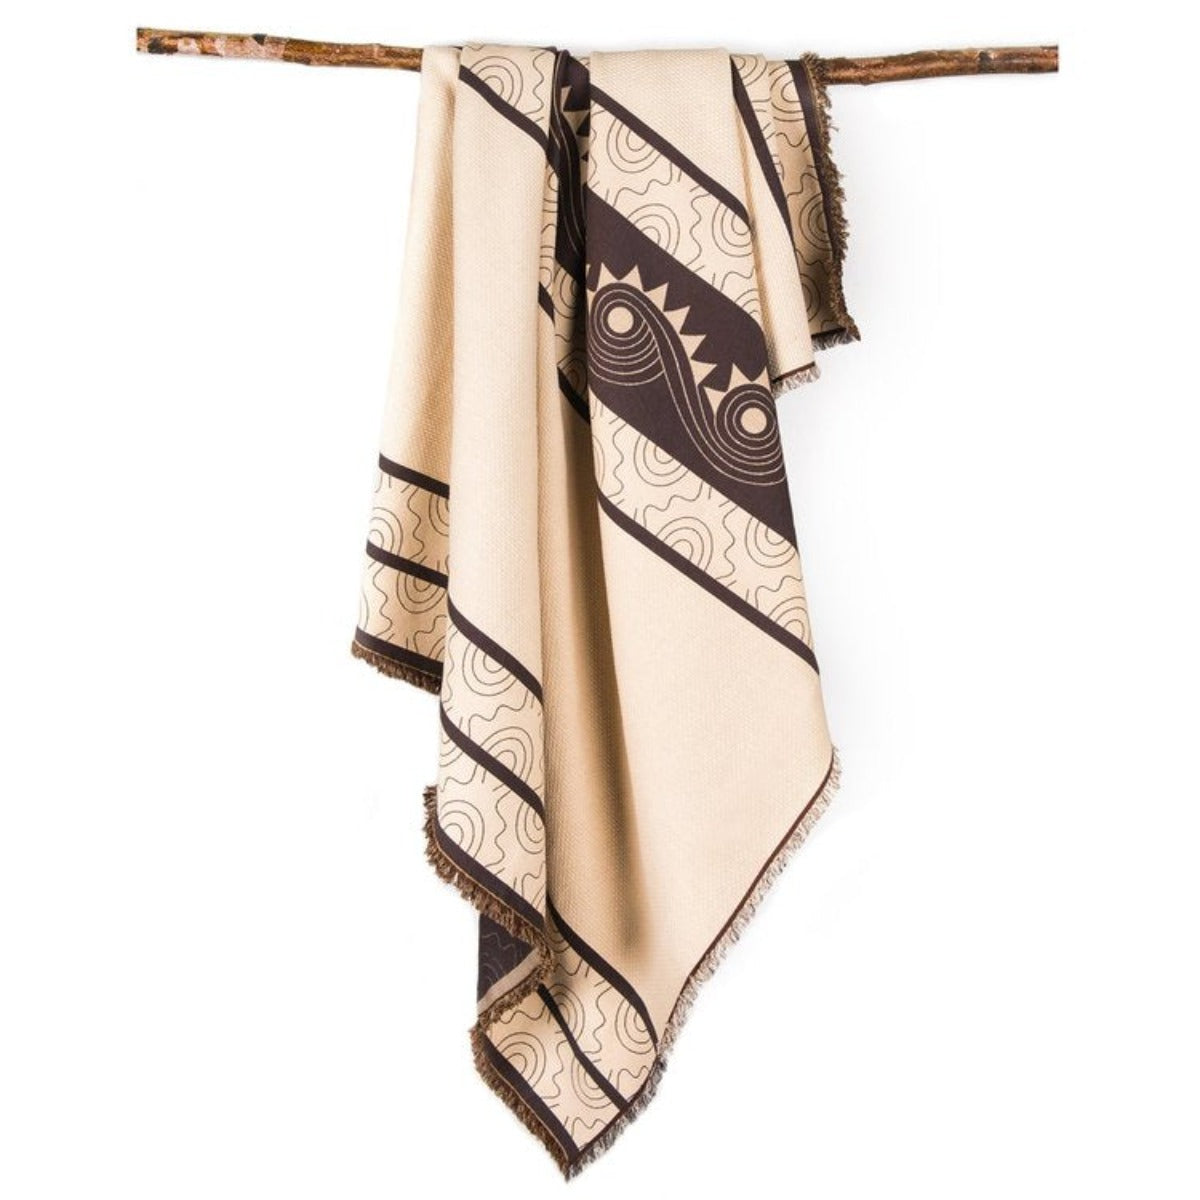 Mahli (Wind) Blanket